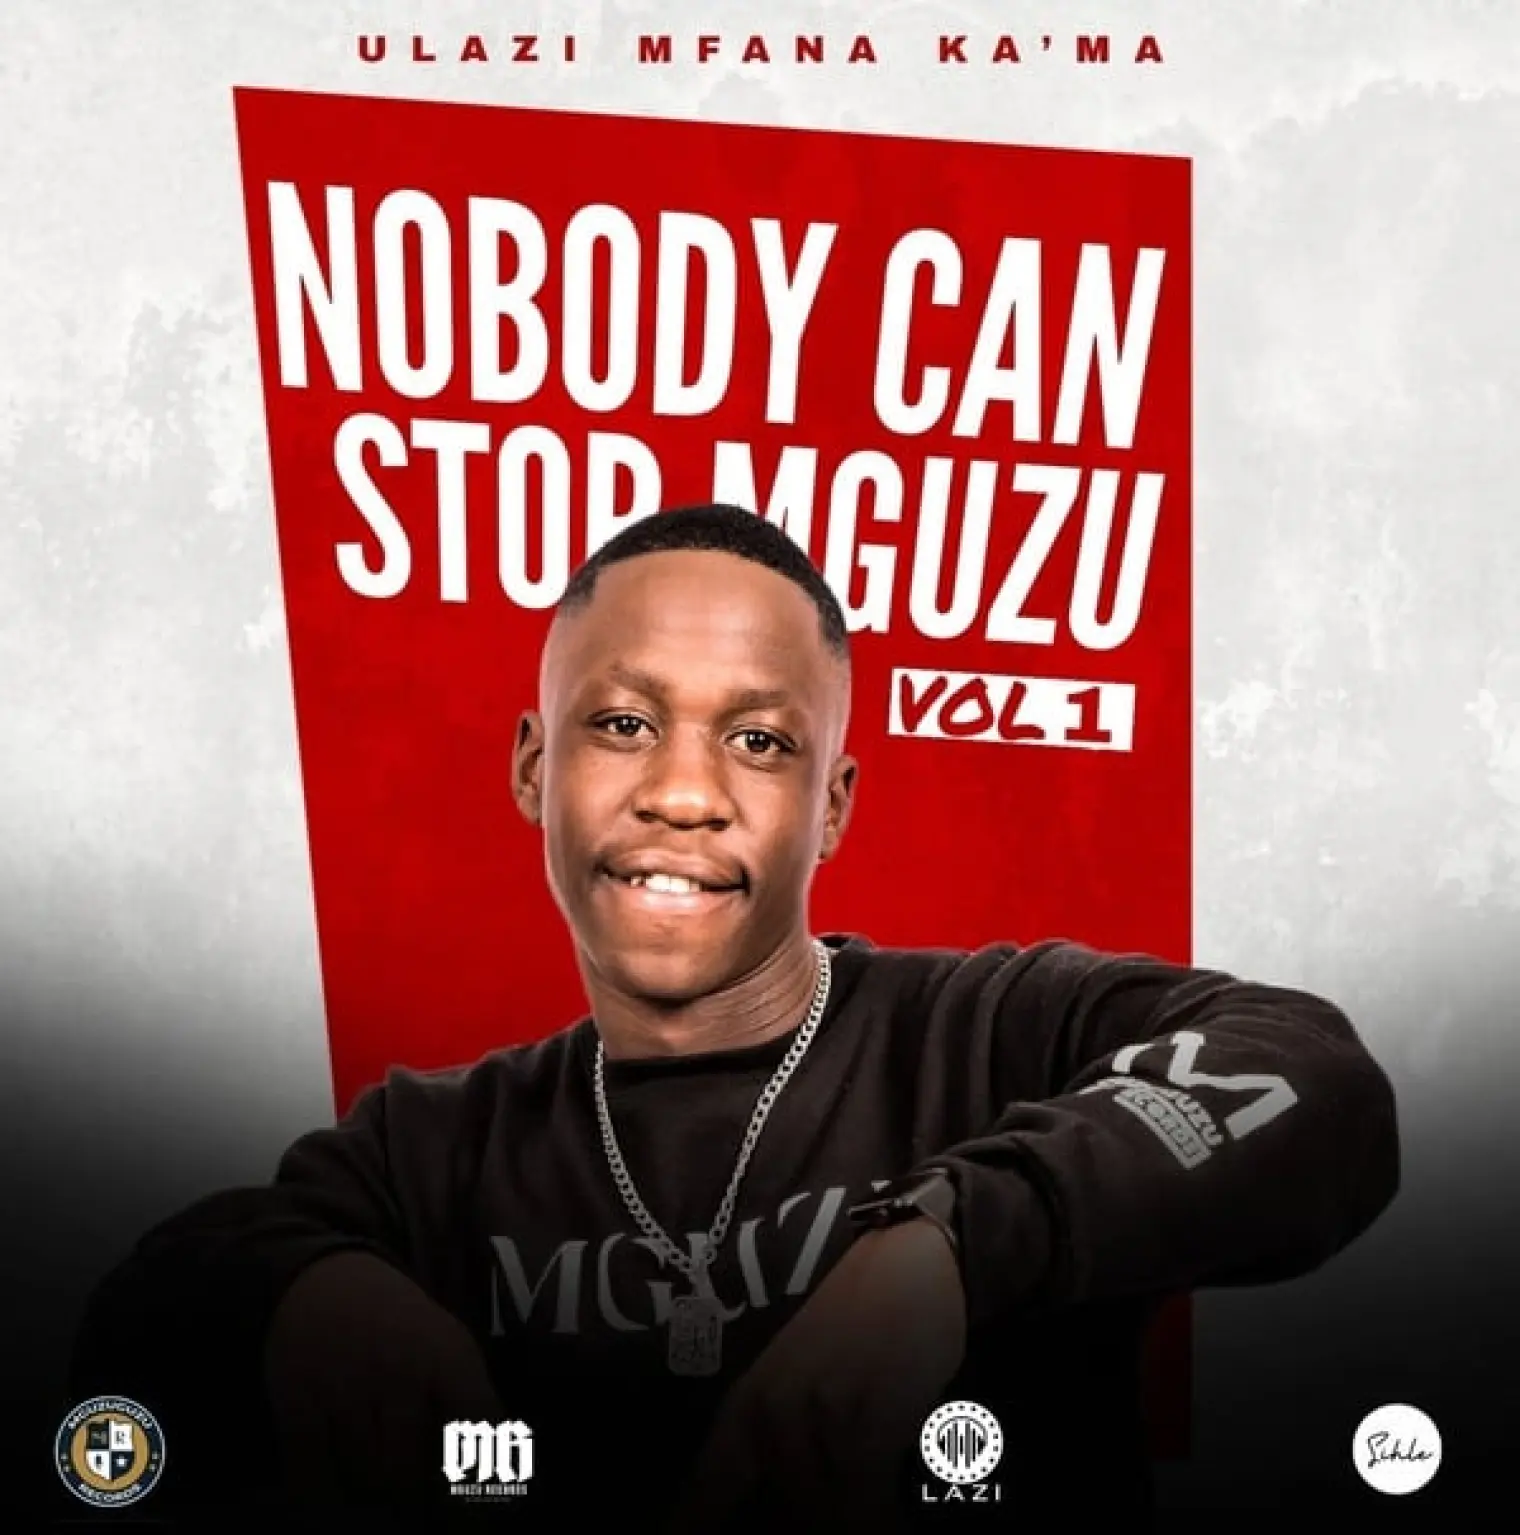 Nobody Can Stop Mguzu, Vol. 1 -  uLazi 